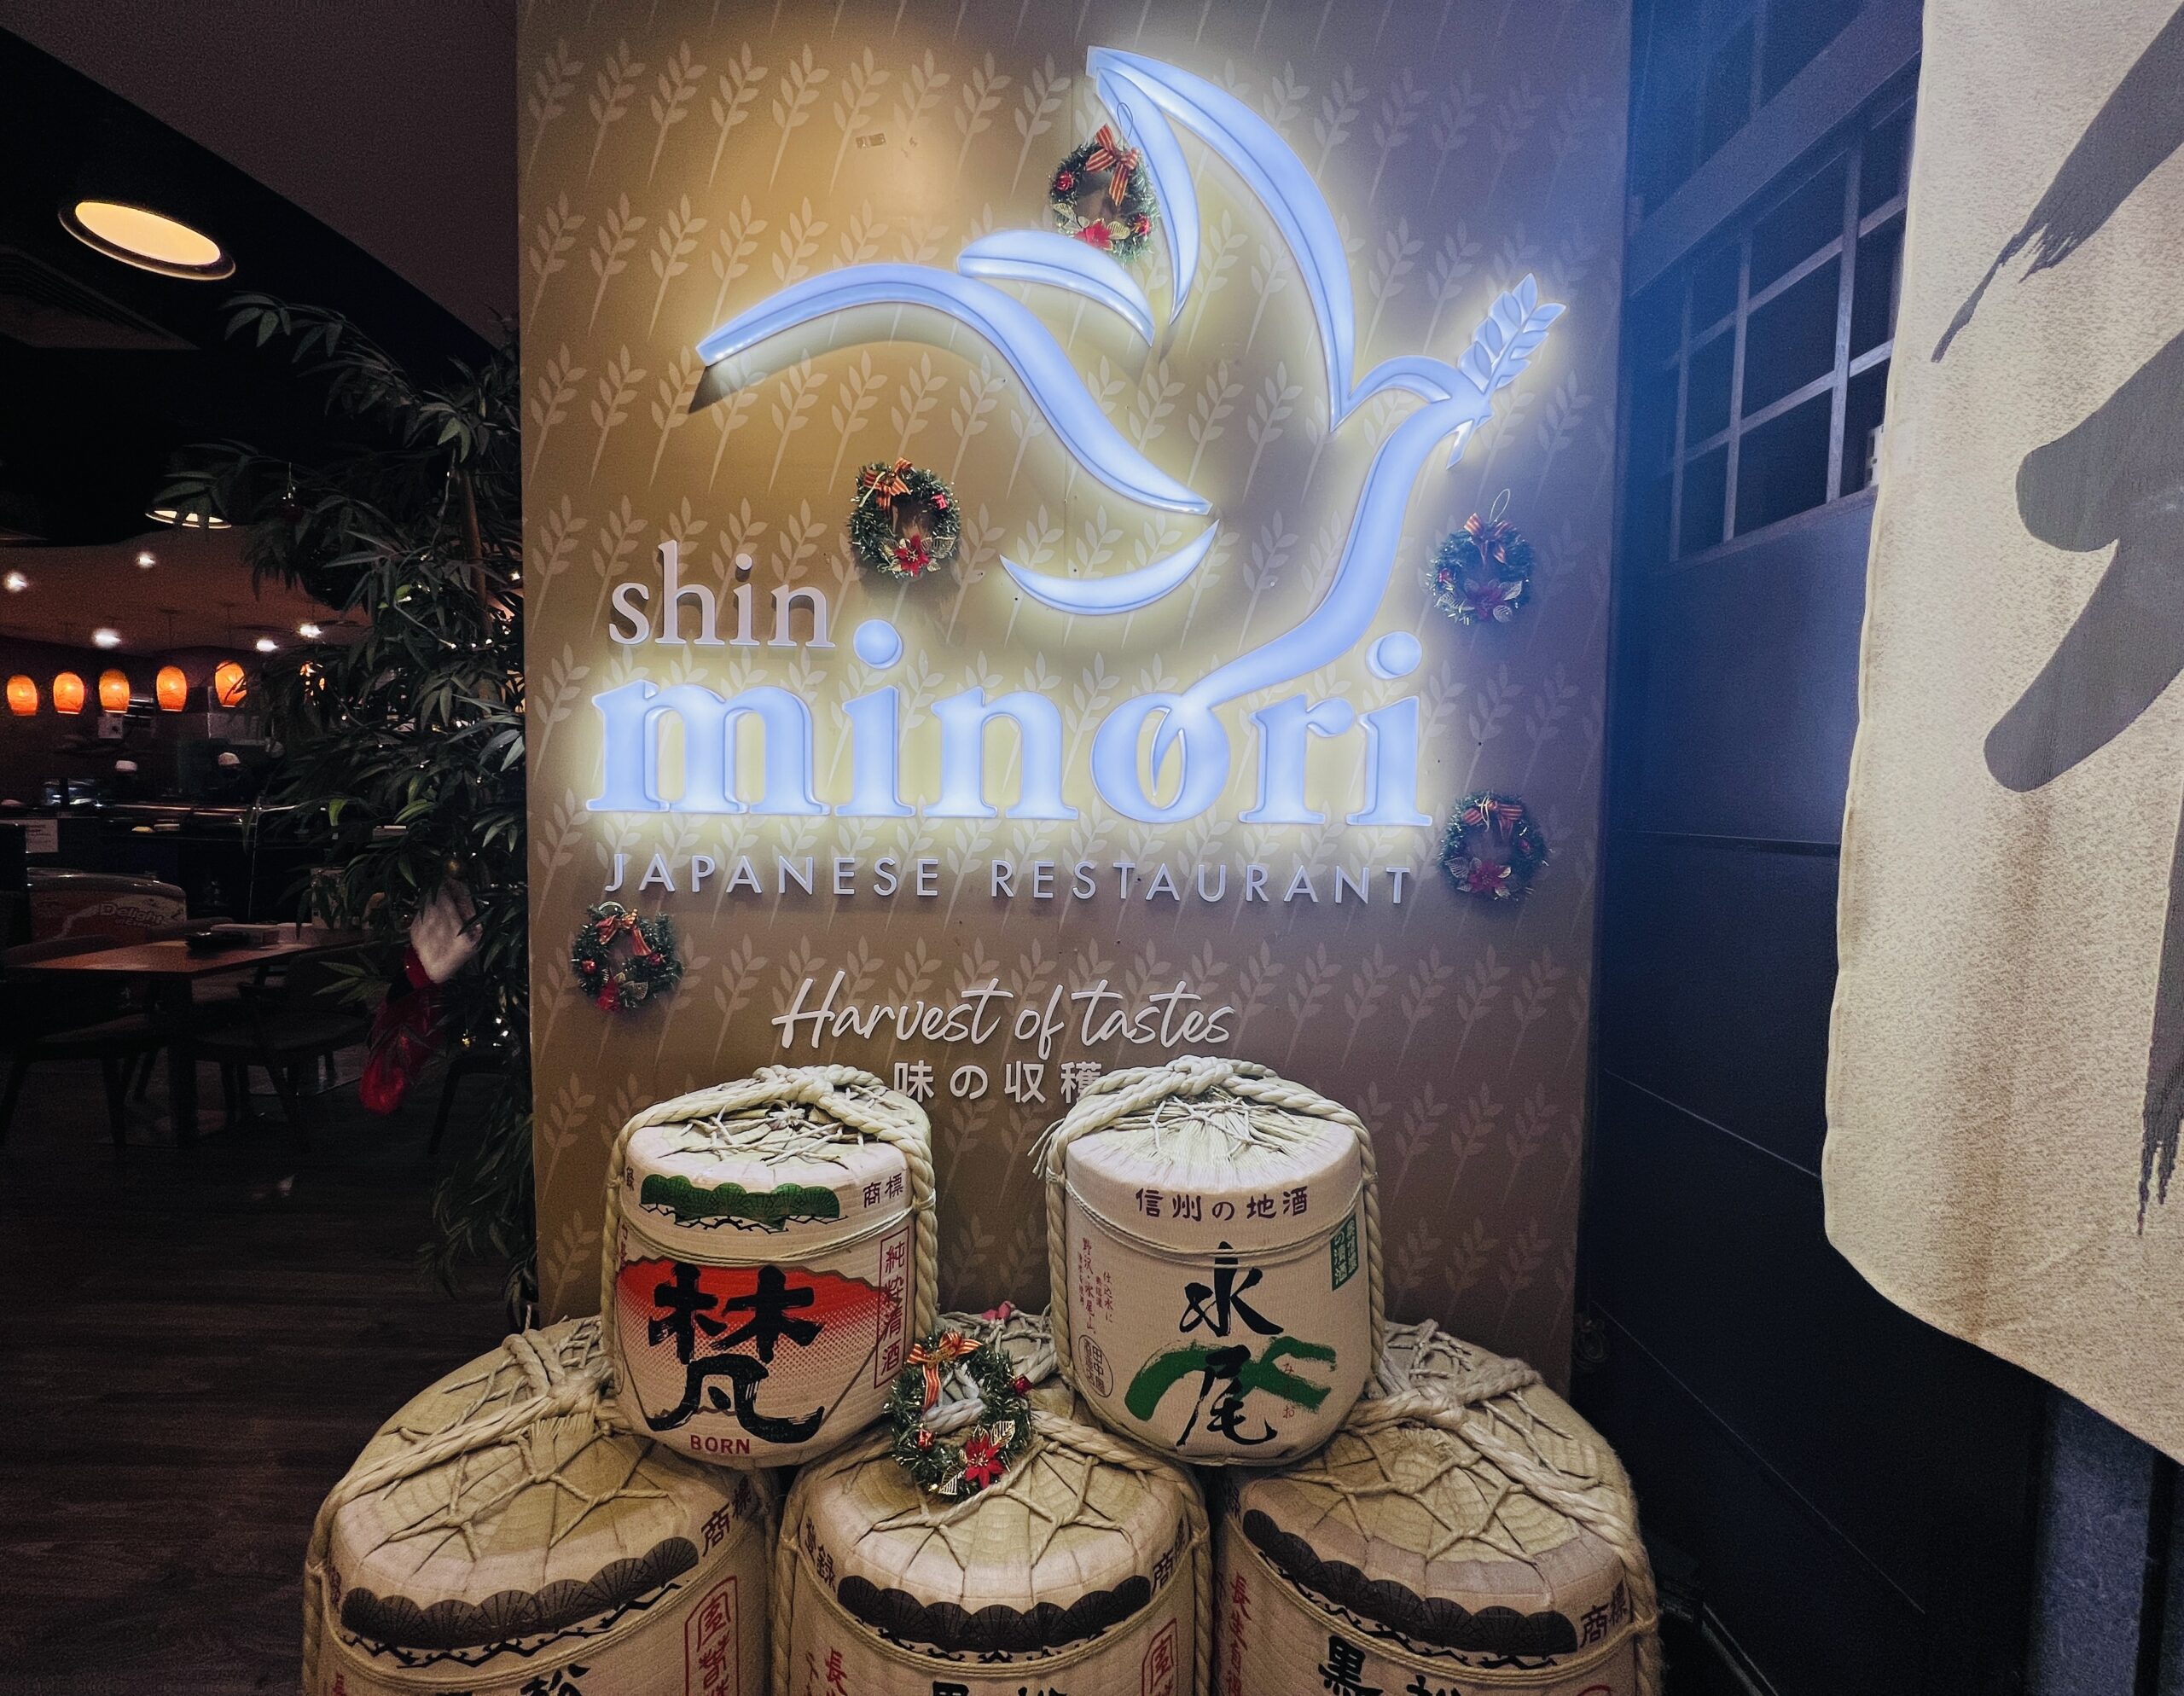 Shin Minori Japanese Restaurant - Restaurant Front